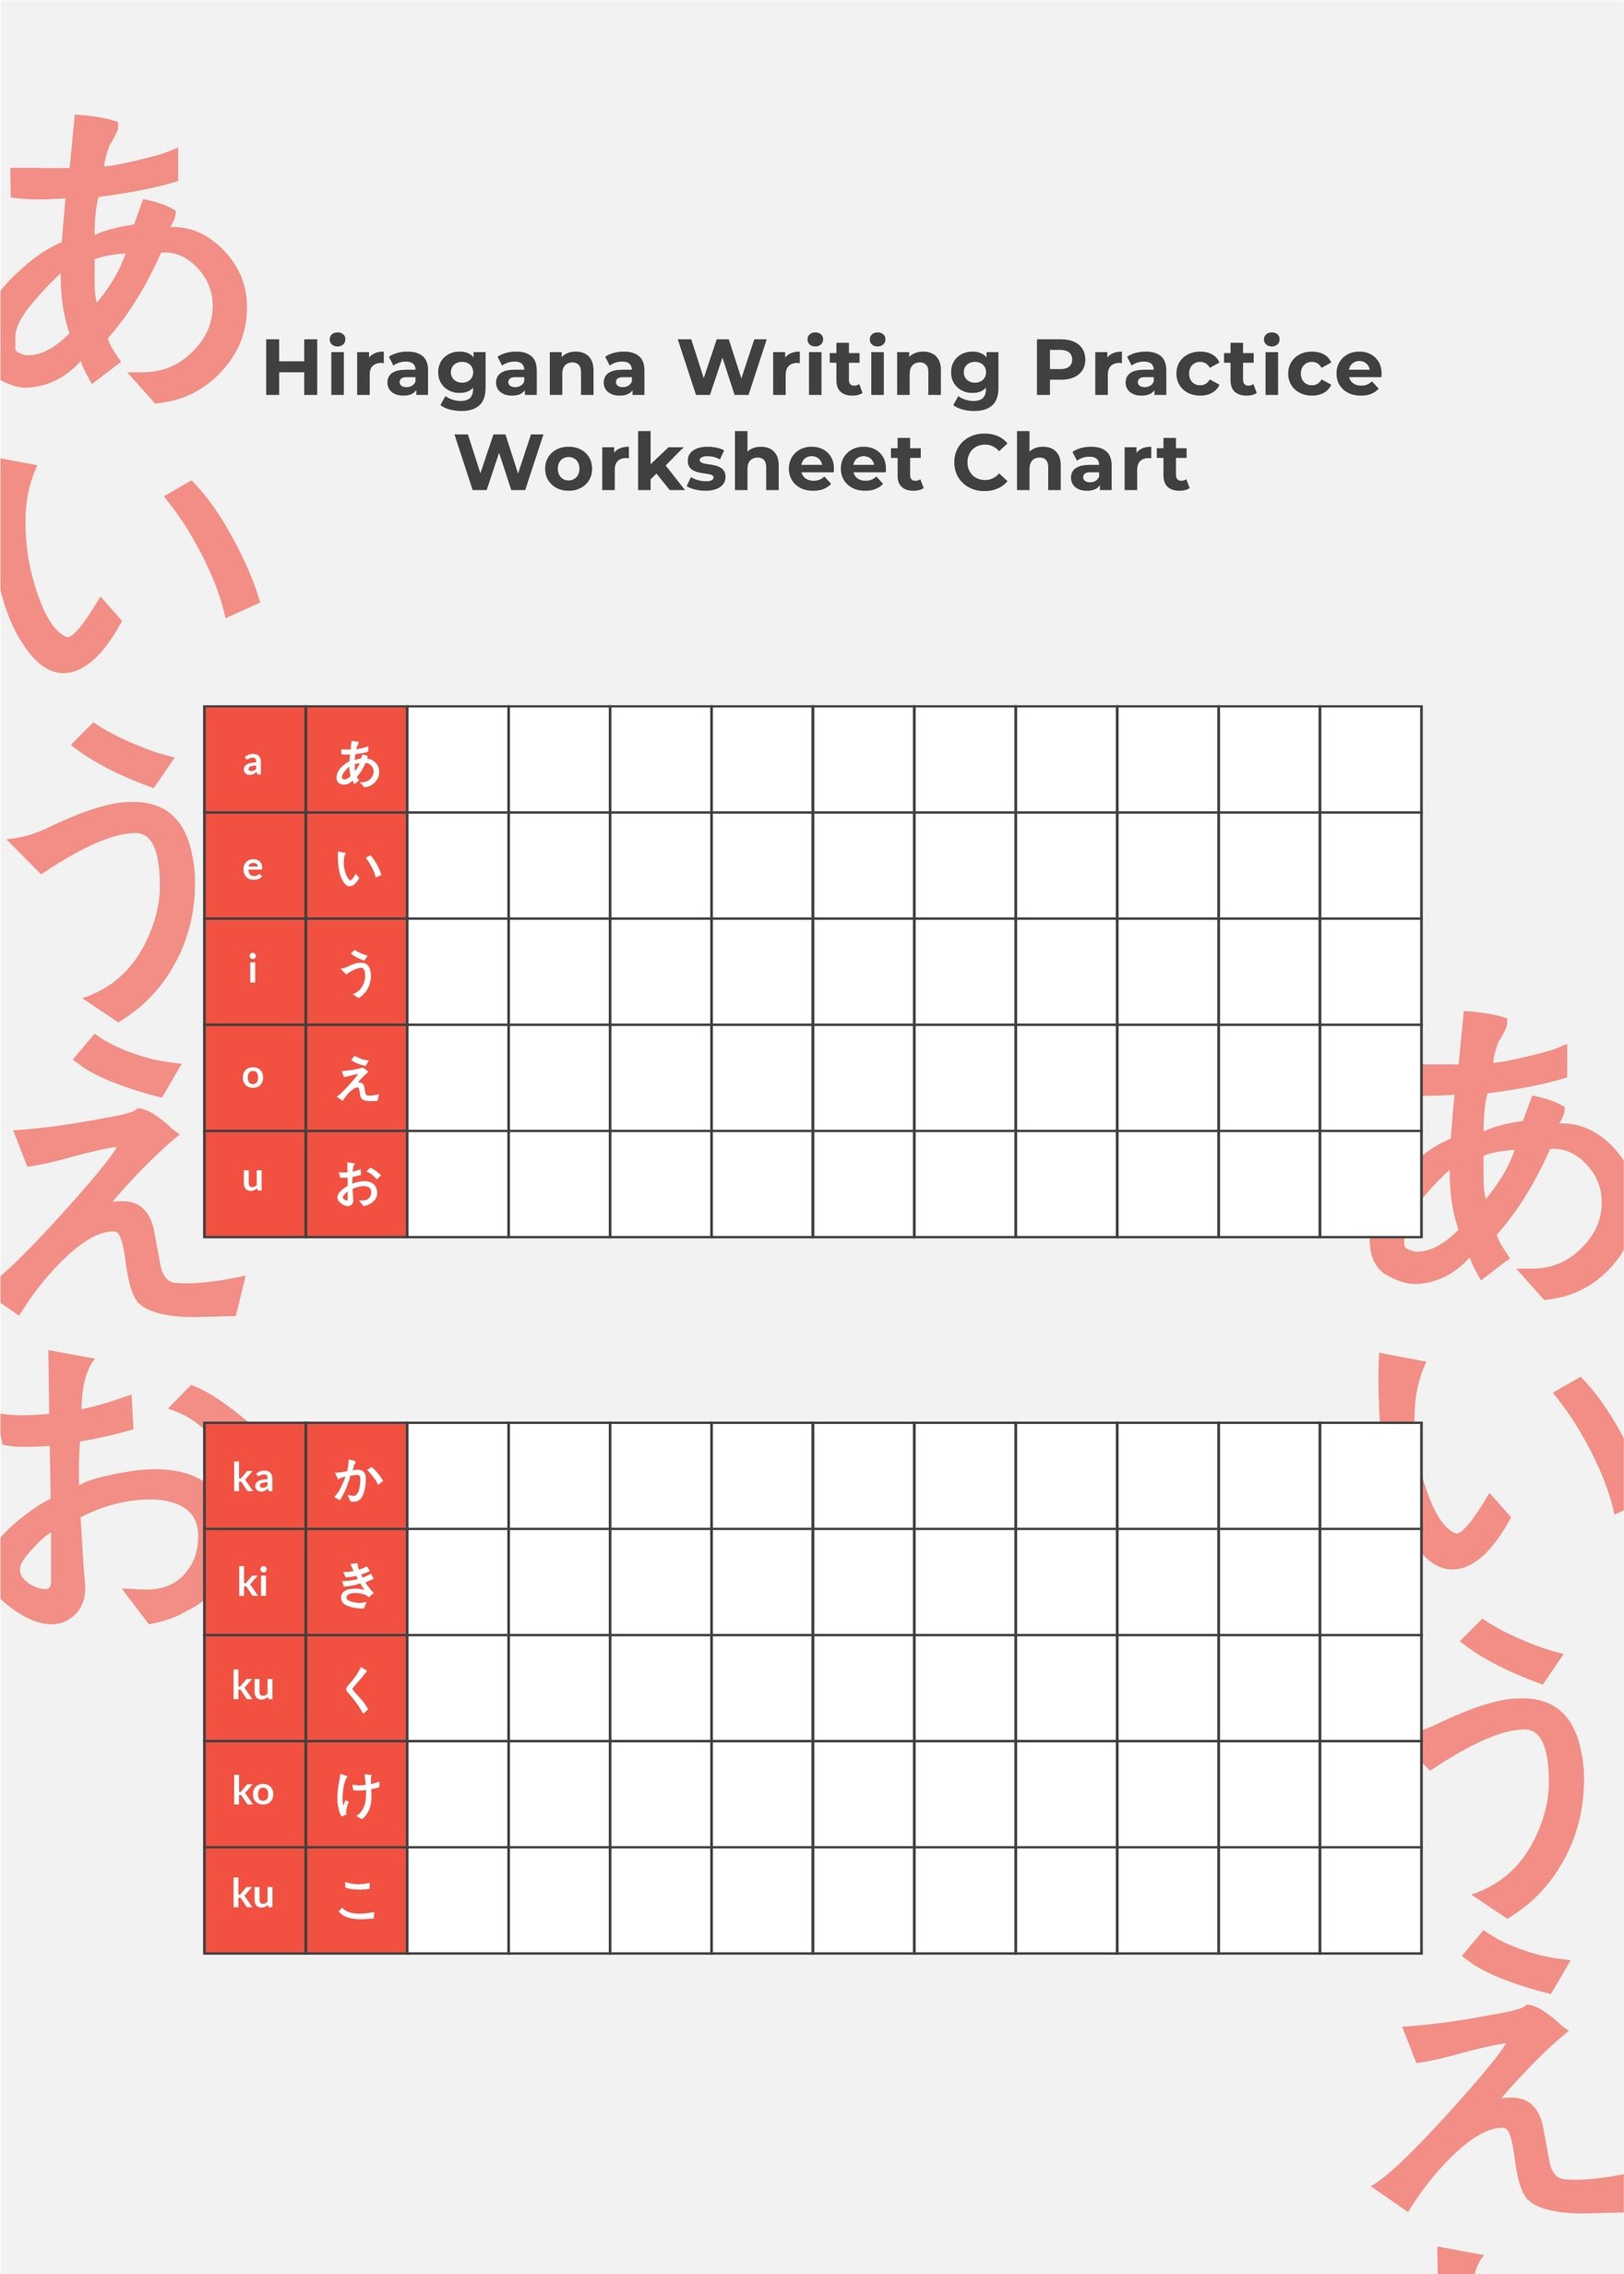 hiragana-practice-chart-download-printable-pdf-templateroller-images